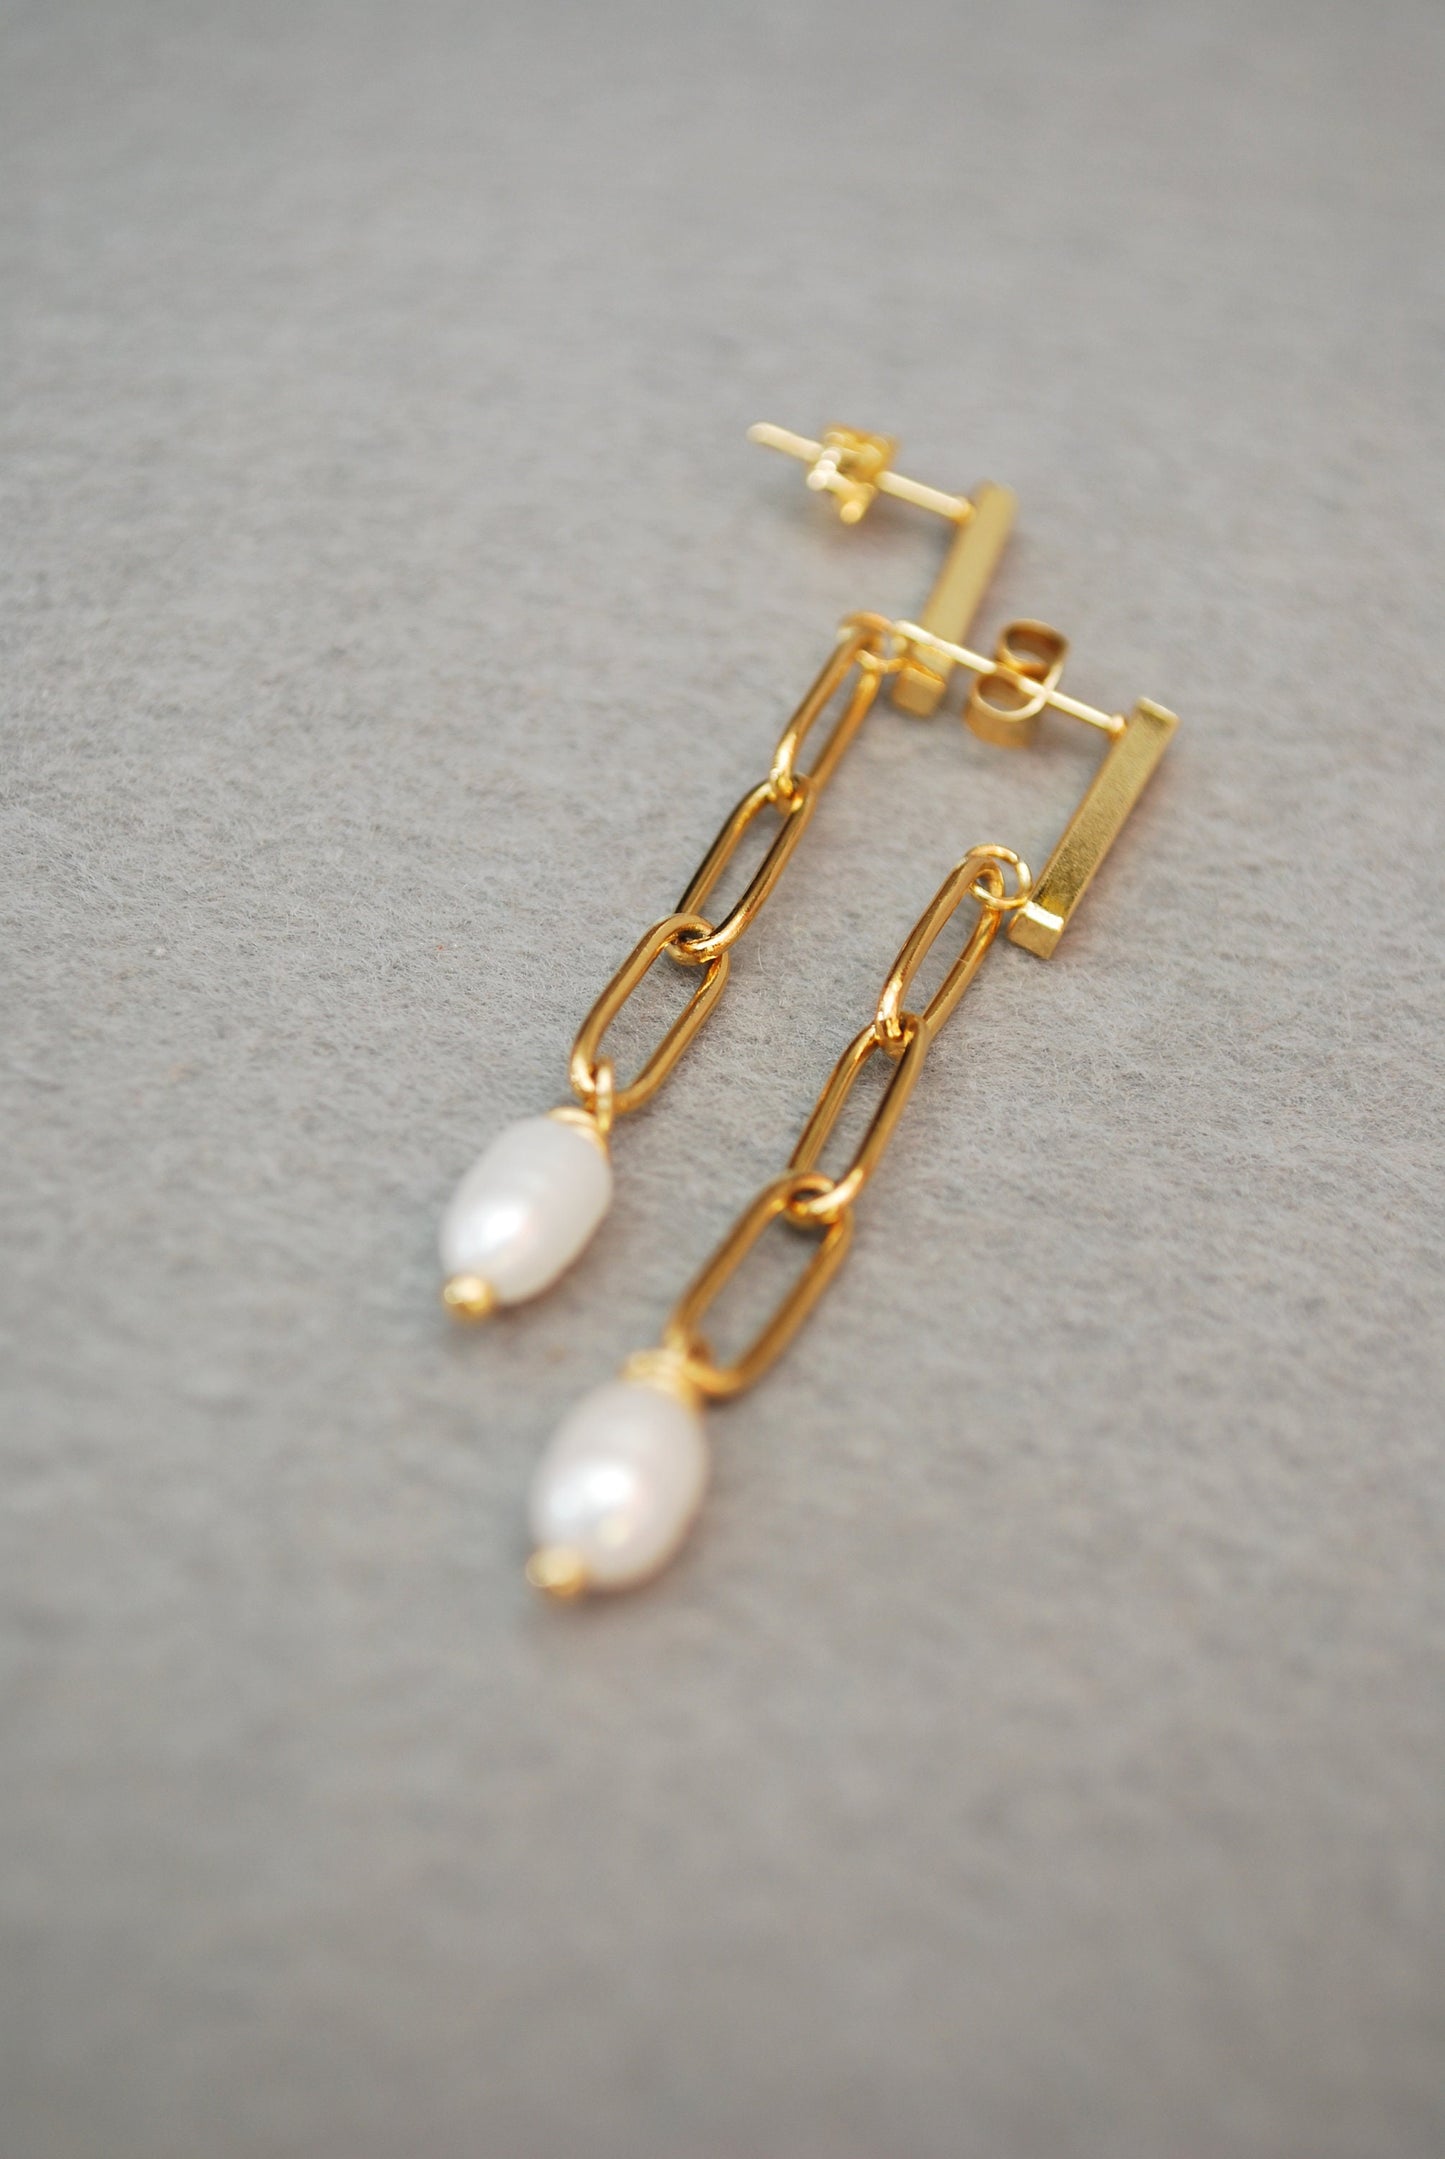 Link Chain Earrings, freshwater pearl earrings, gold stainless steel, wedding bride, 5.5cm - 2"